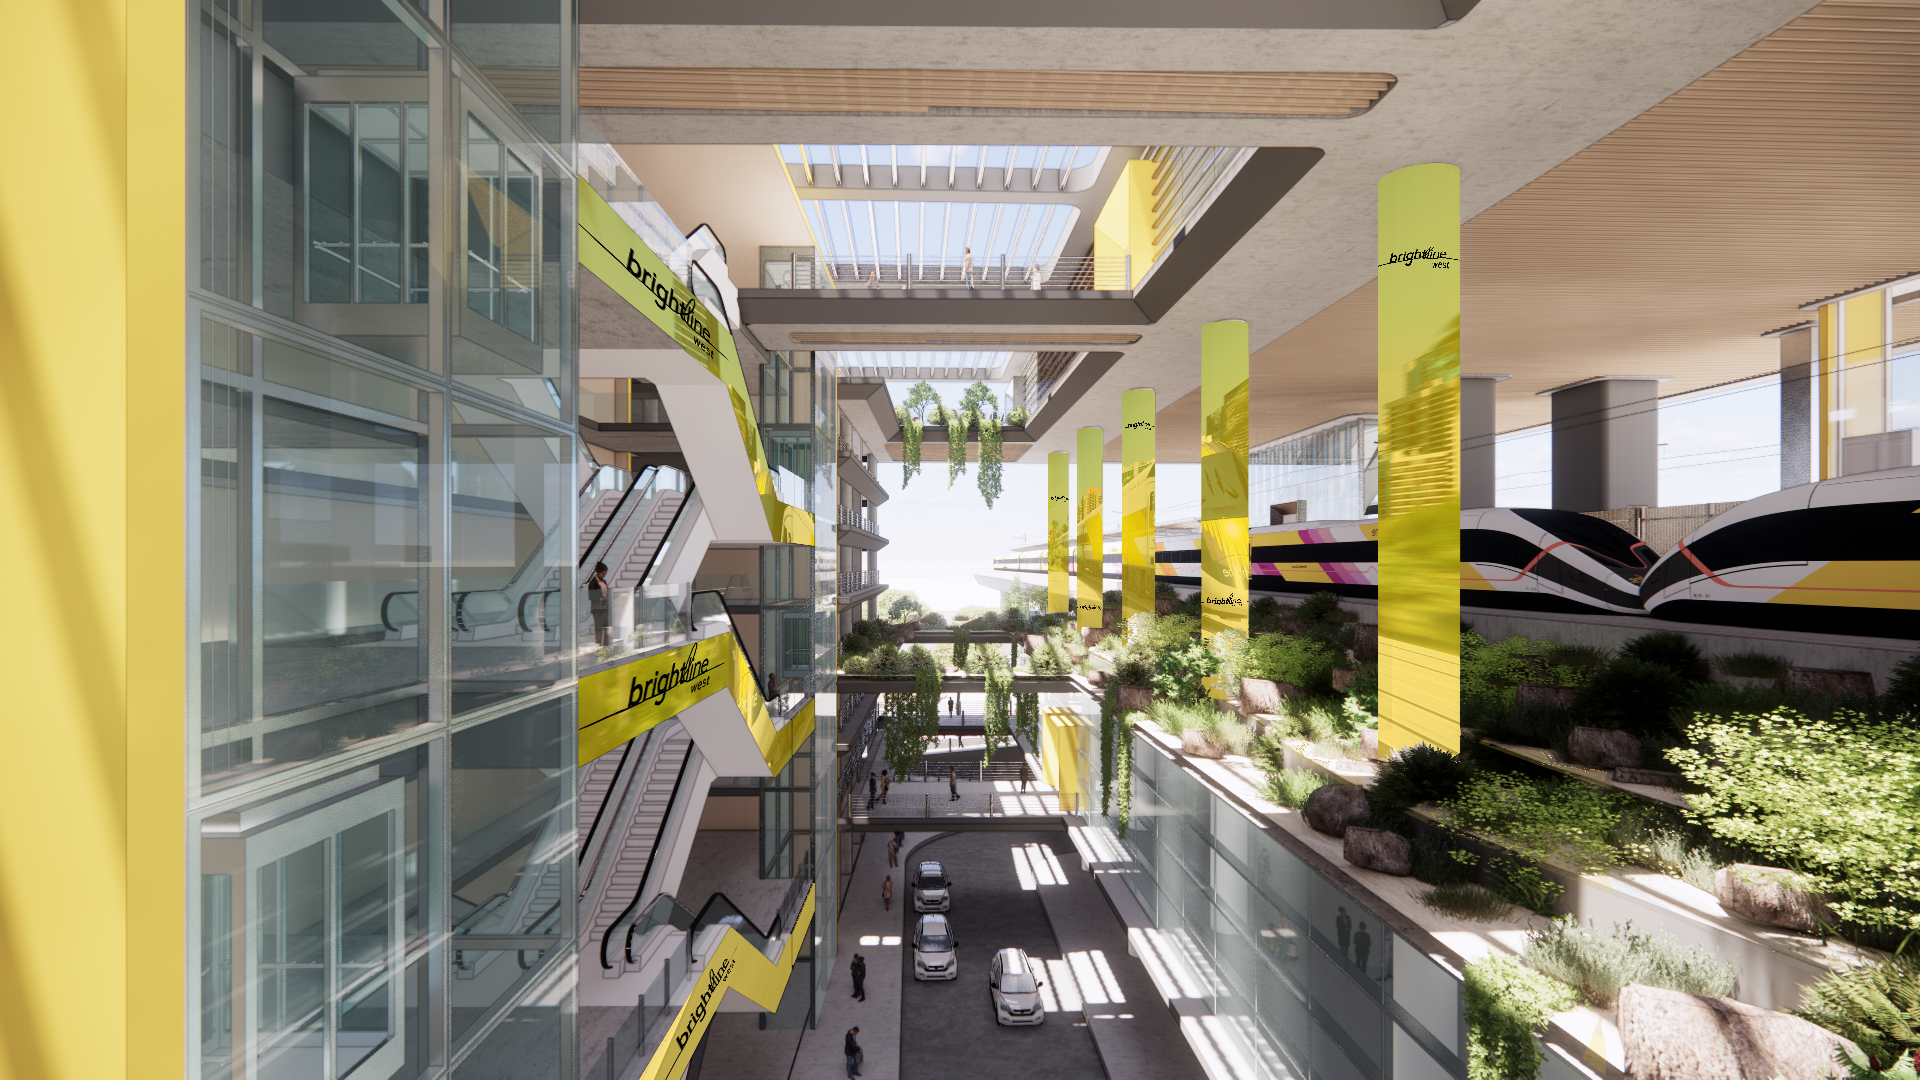 Cucamonga Station Transportation Hub artist rendering of interior of building 